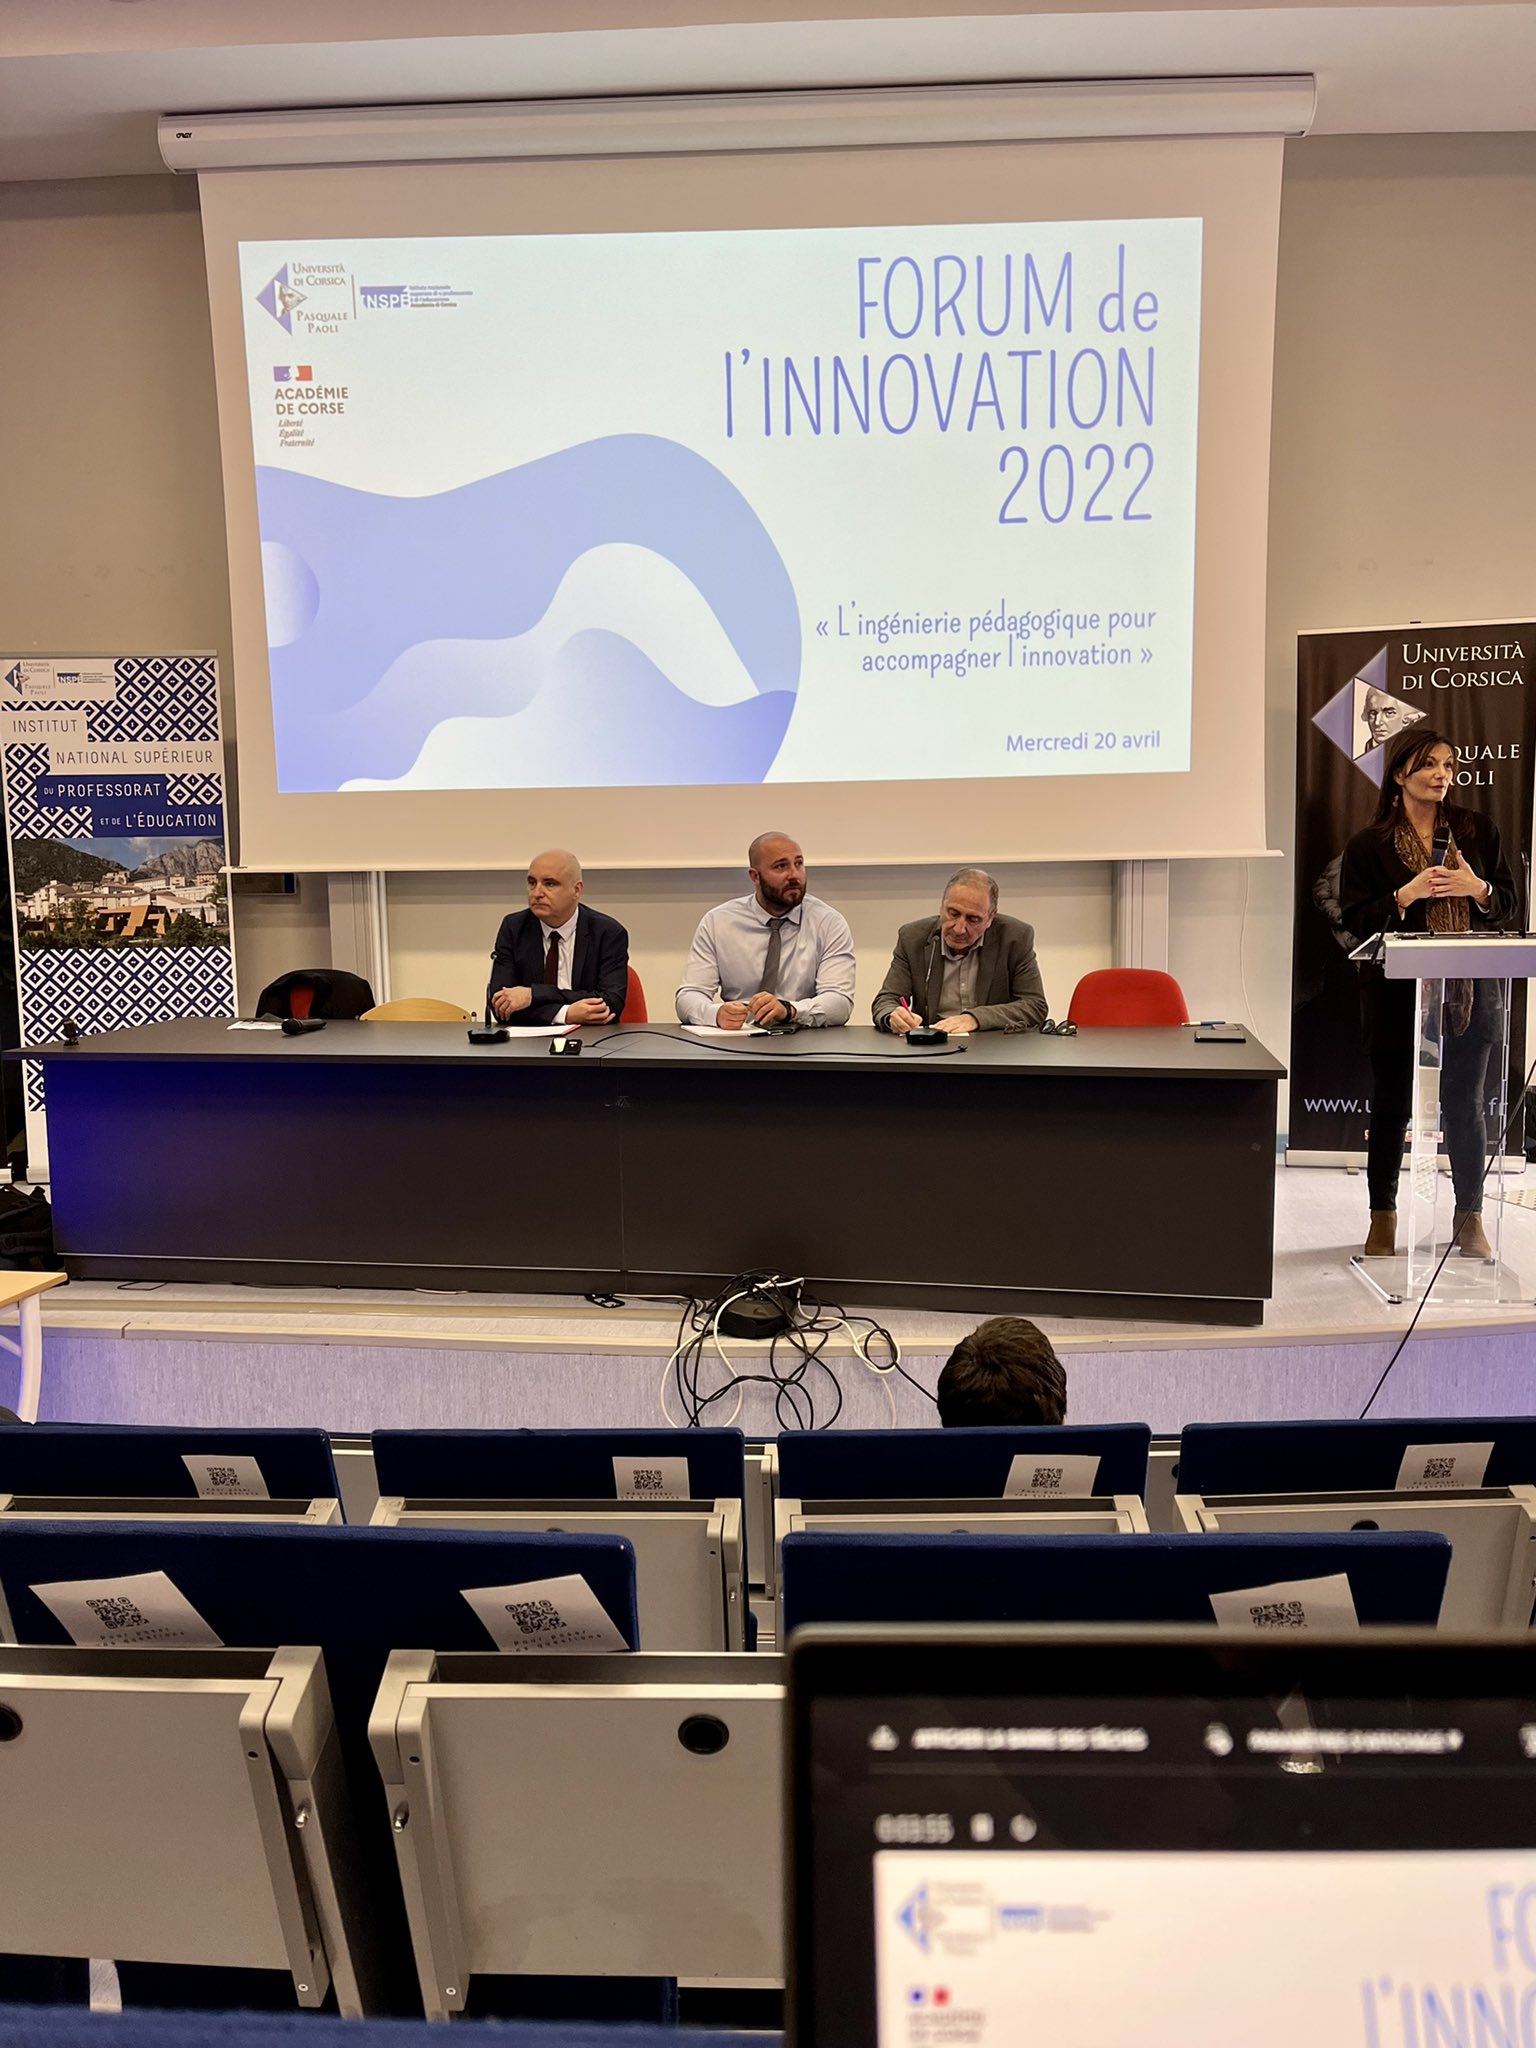 Forum de l'innovation 